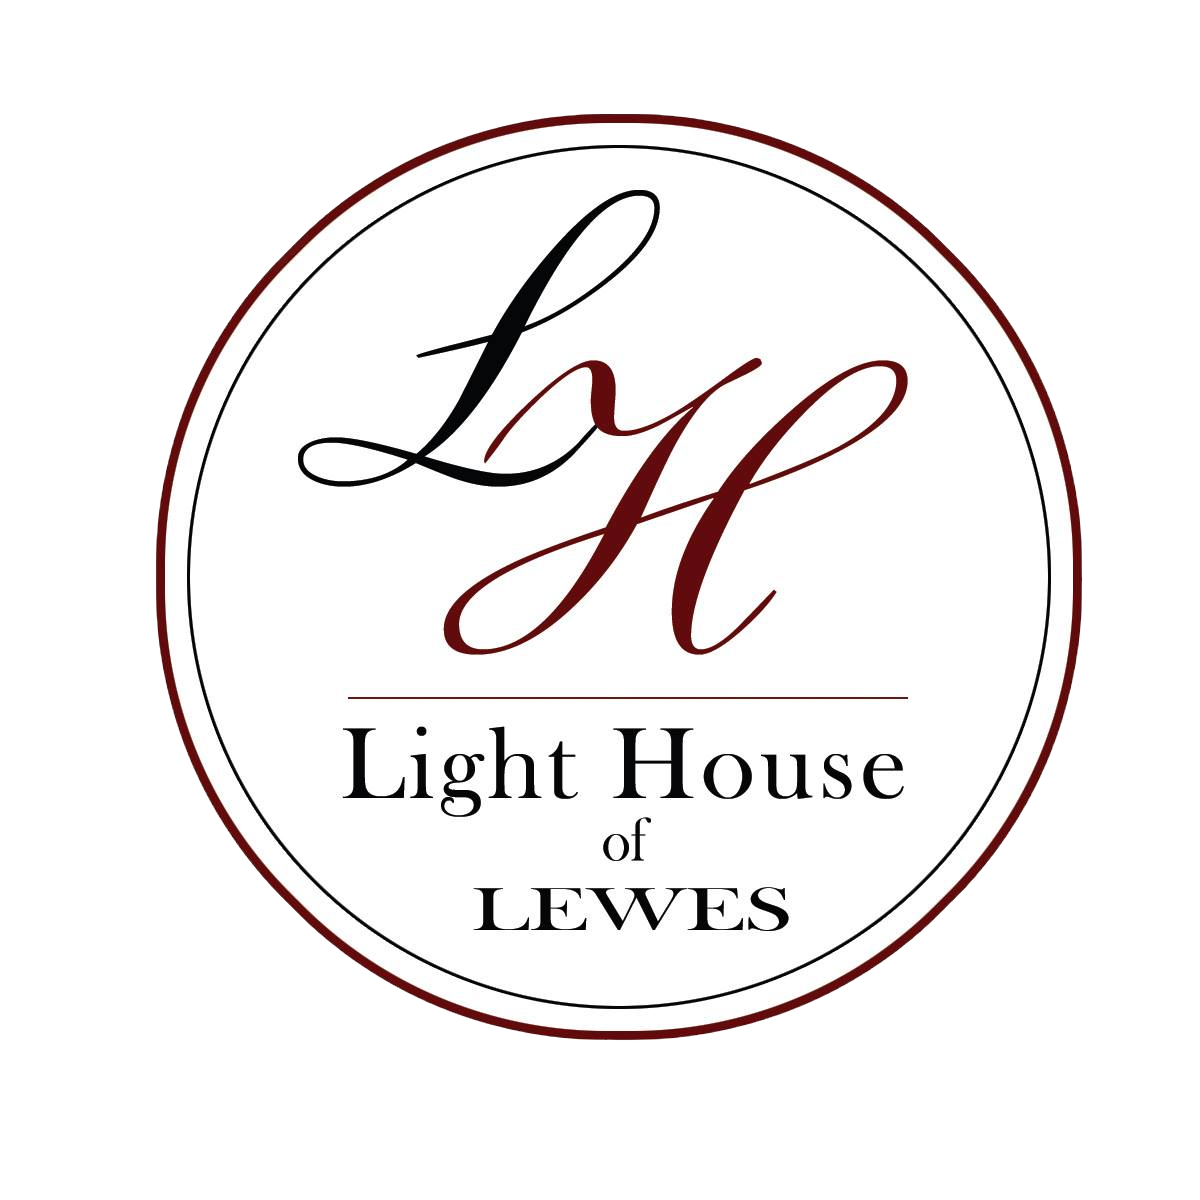 Light house of lewes logo